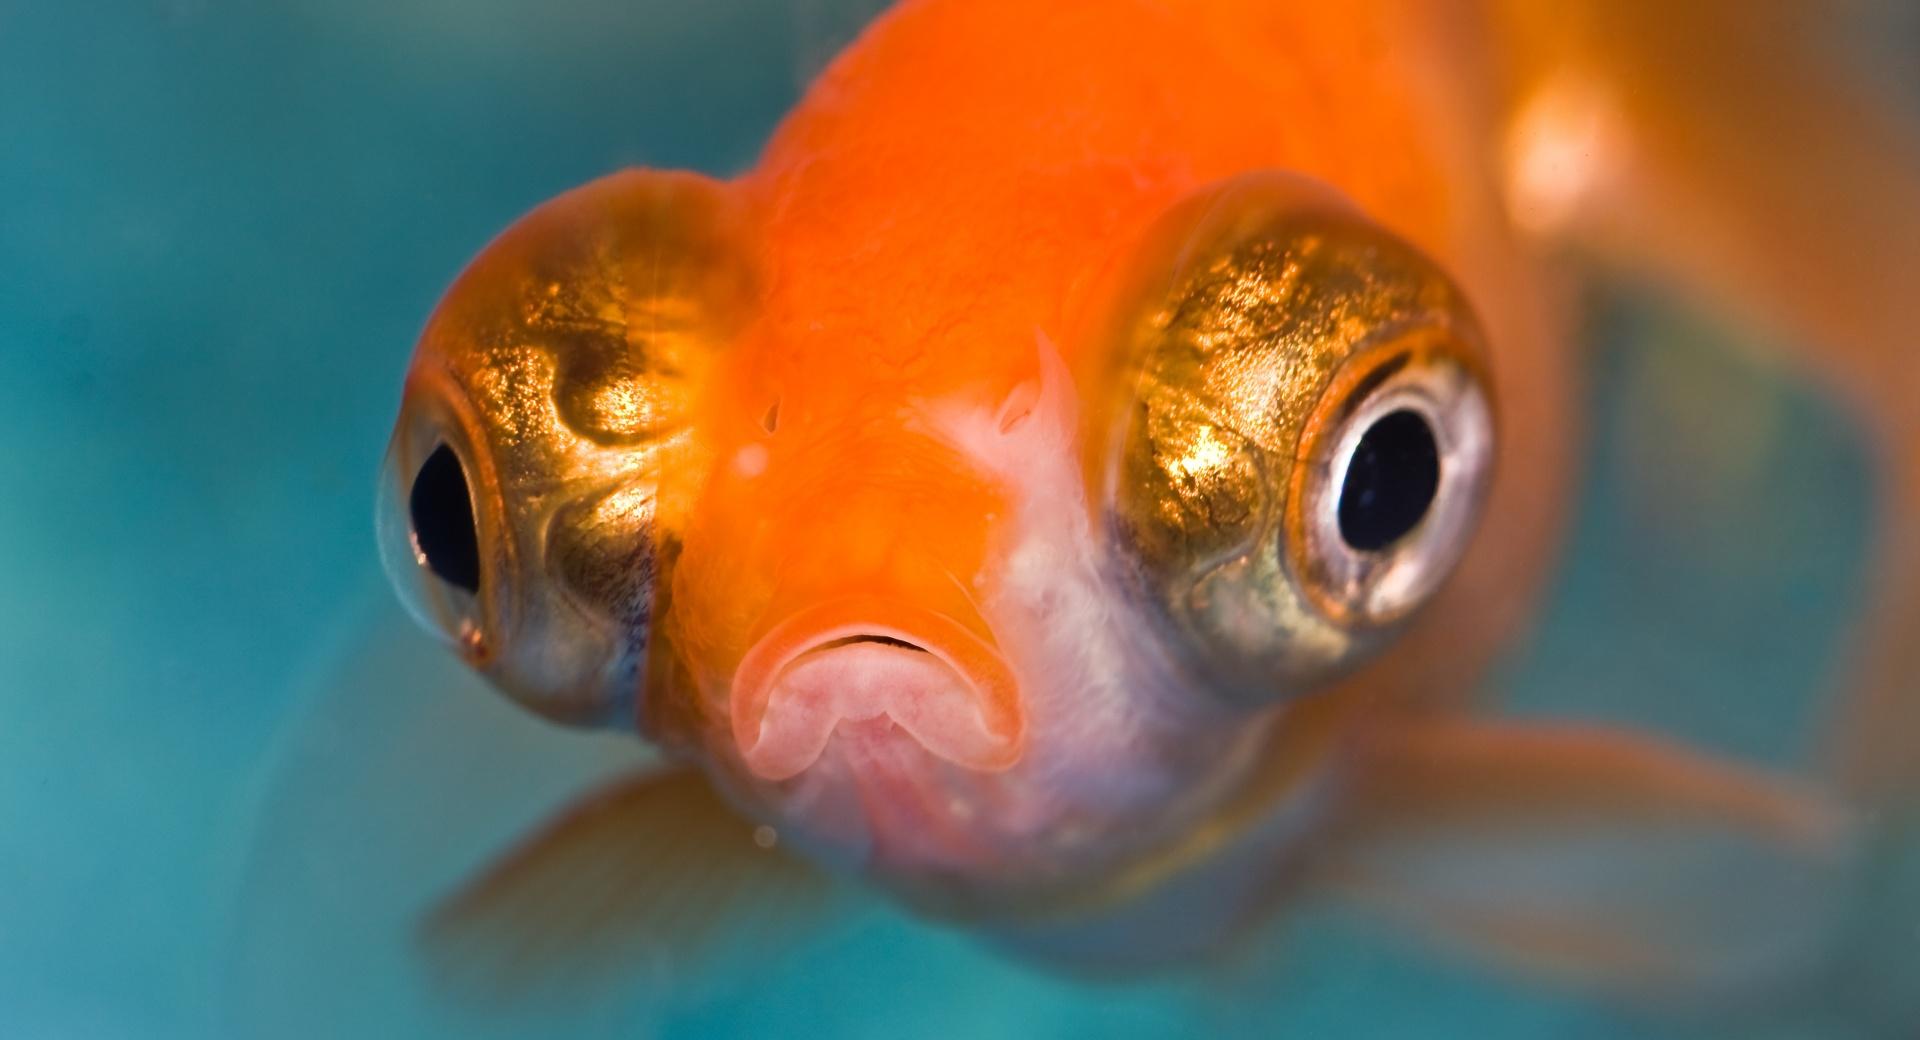 Telescope Goldfish Aquarium wallpapers HD quality